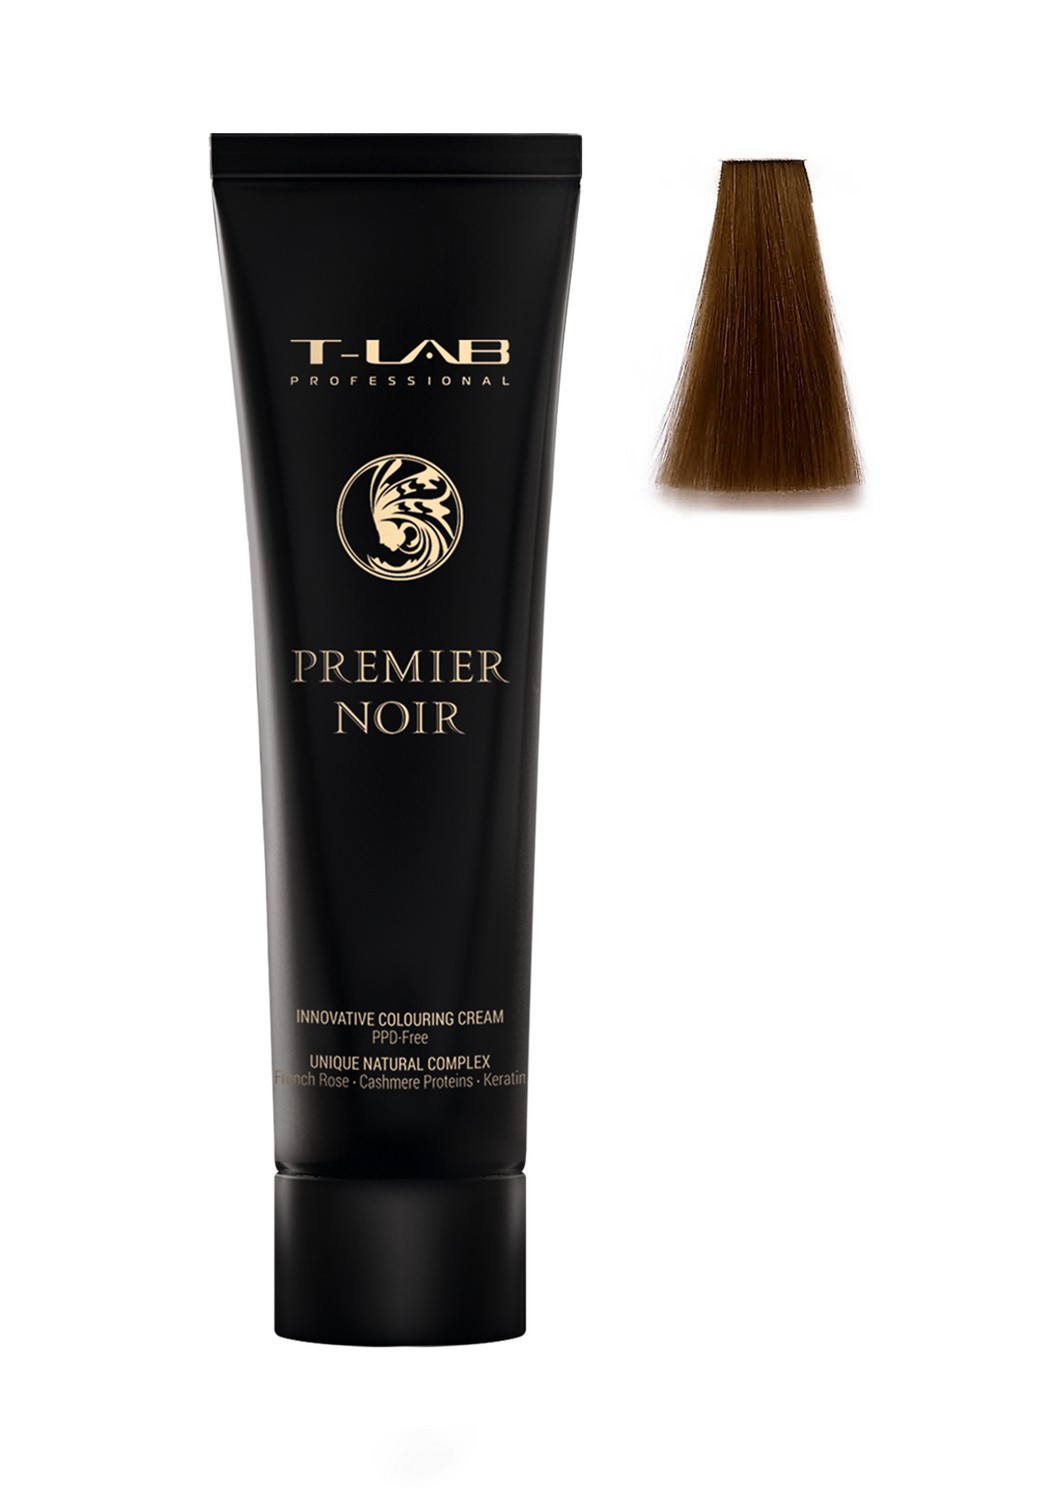 Крем-краска T-LAB Professional Premier Noir colouring cream, оттенок 7.00 (deep natural blonde) - фото 2